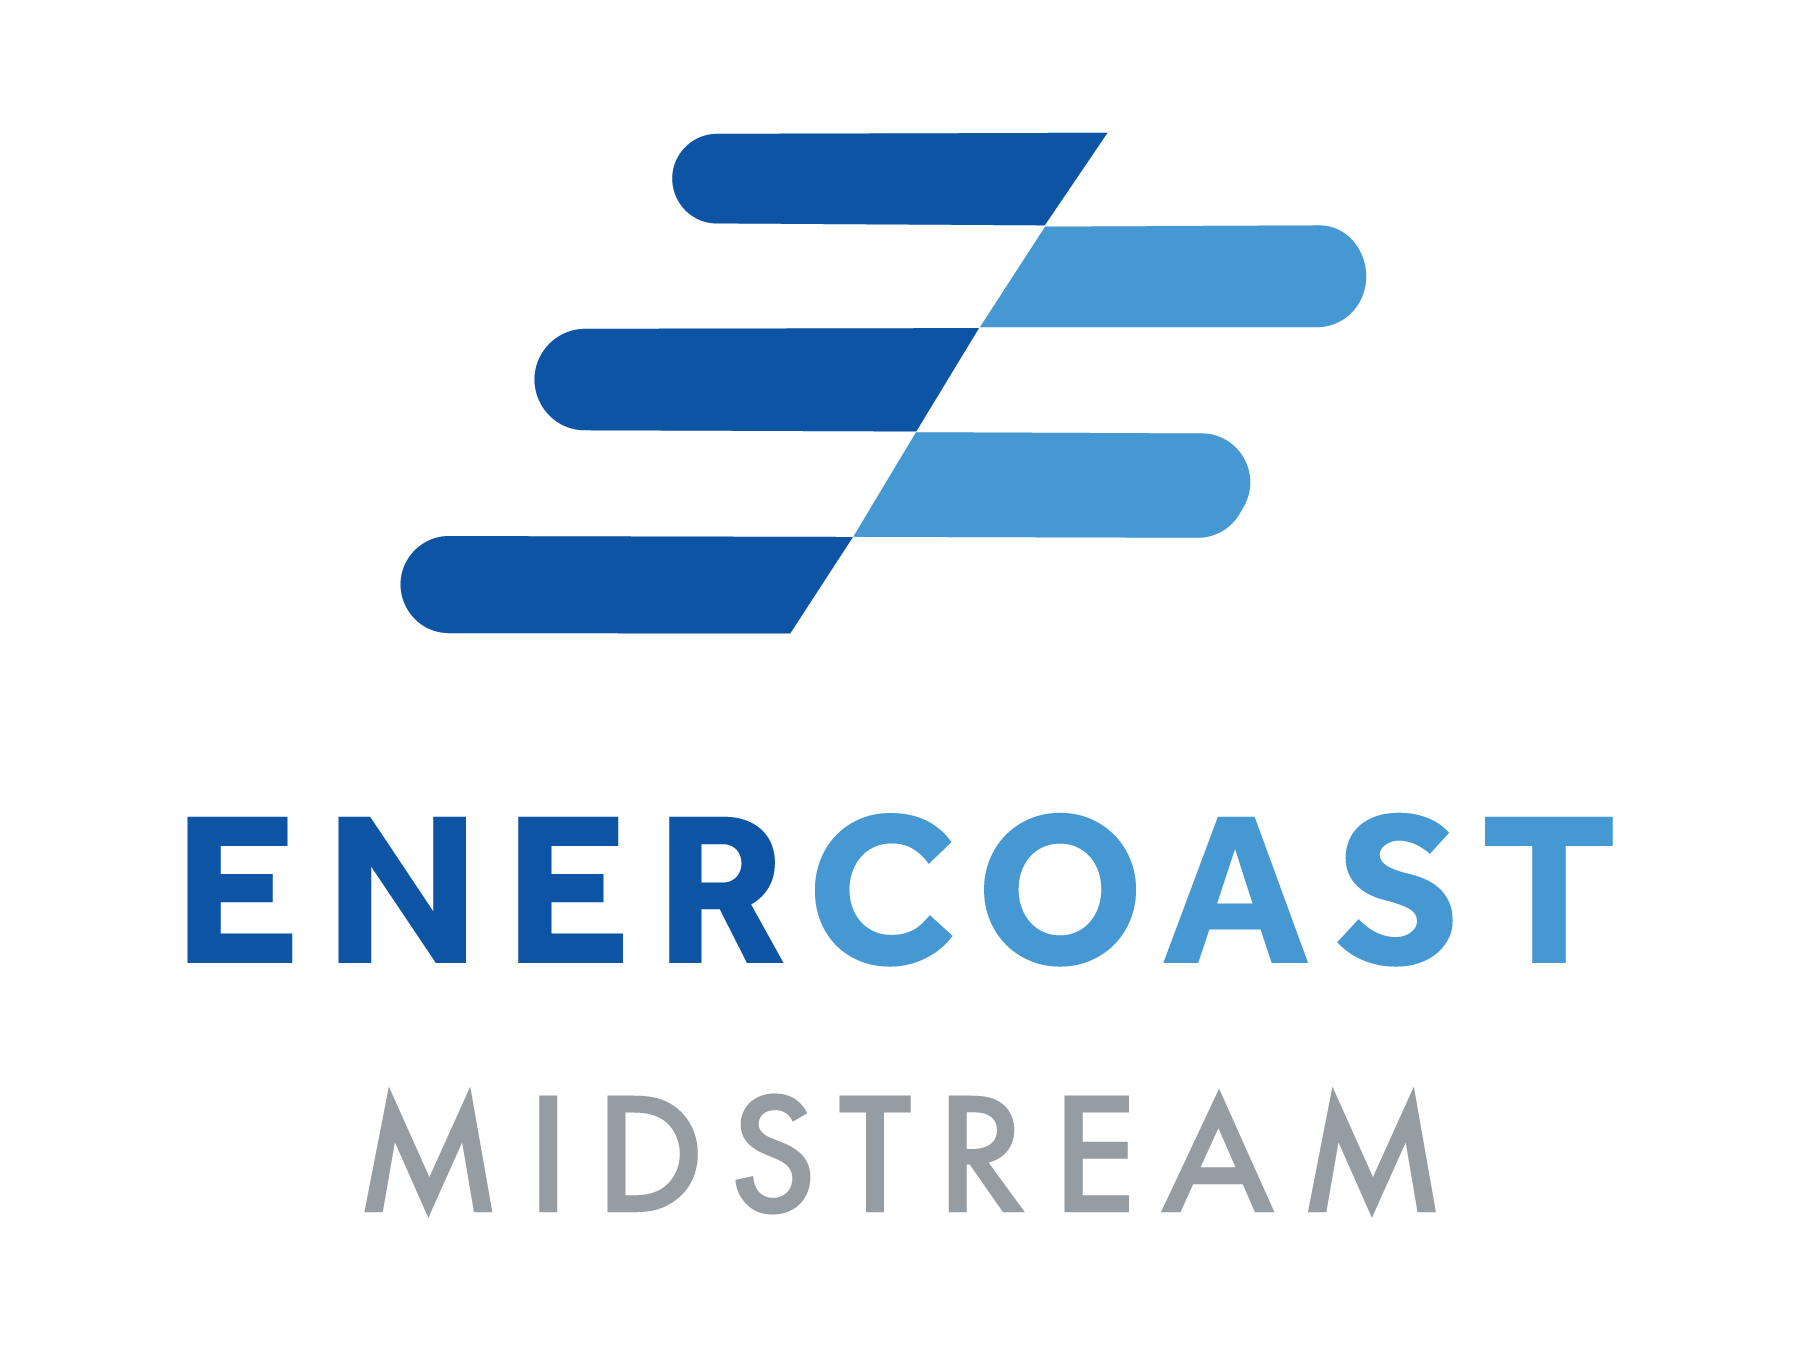 Enercoast Midstream logo